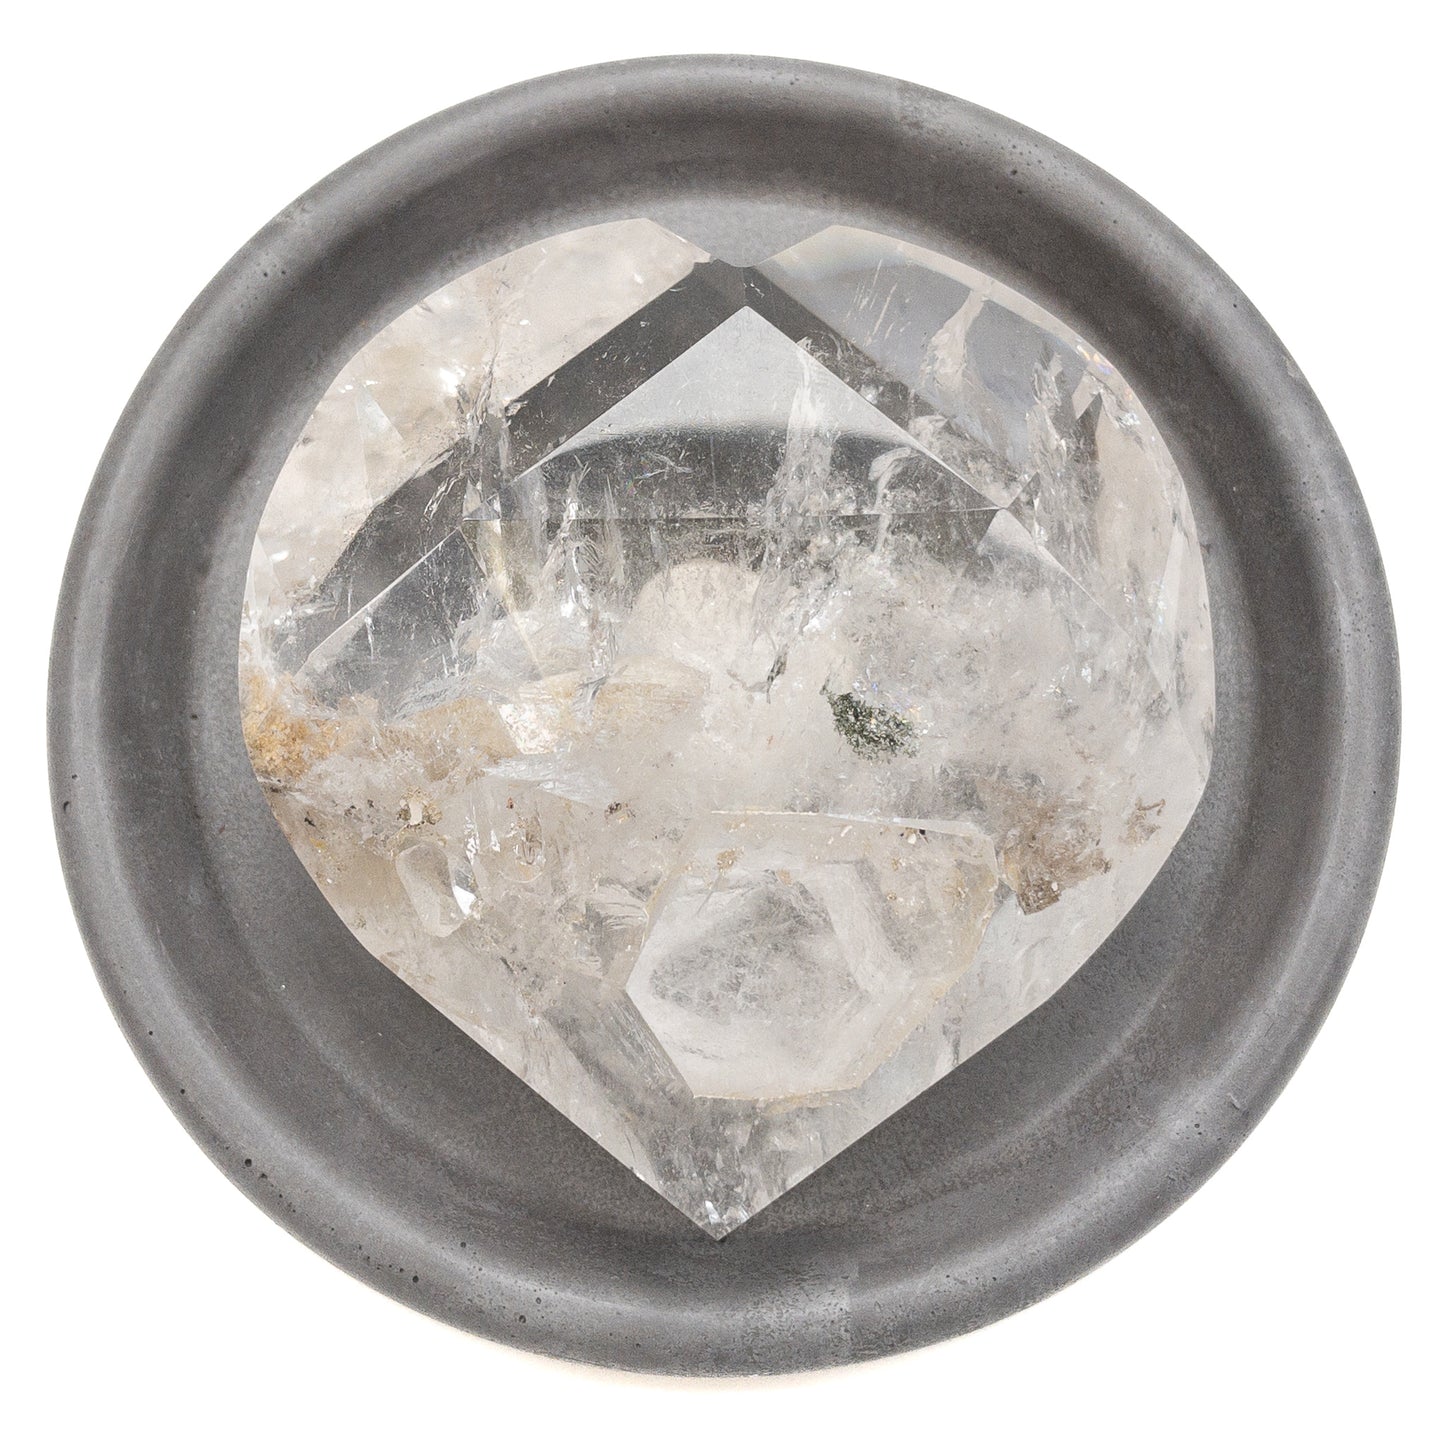 Crystal Quartz Extra Large Faceted Heart Palm Stone Specimen - 1 pc.